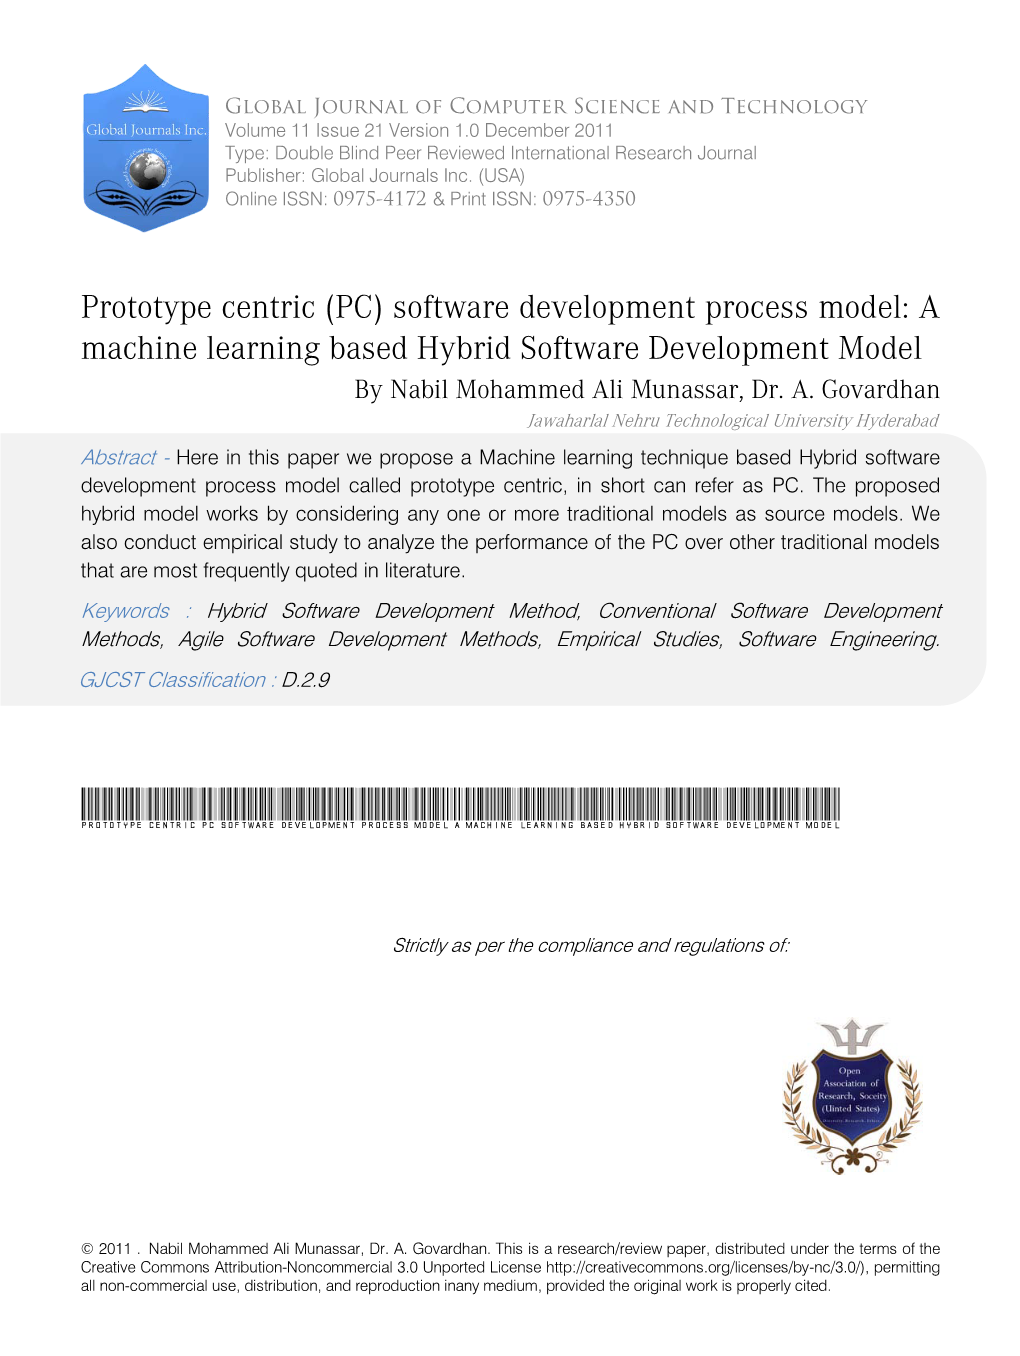 Prototype Centric (PC) Software Development Process Model: a Machine Learning Based Hybrid Software Development Model by Nabil Mohammed Ali Munassar, Dr